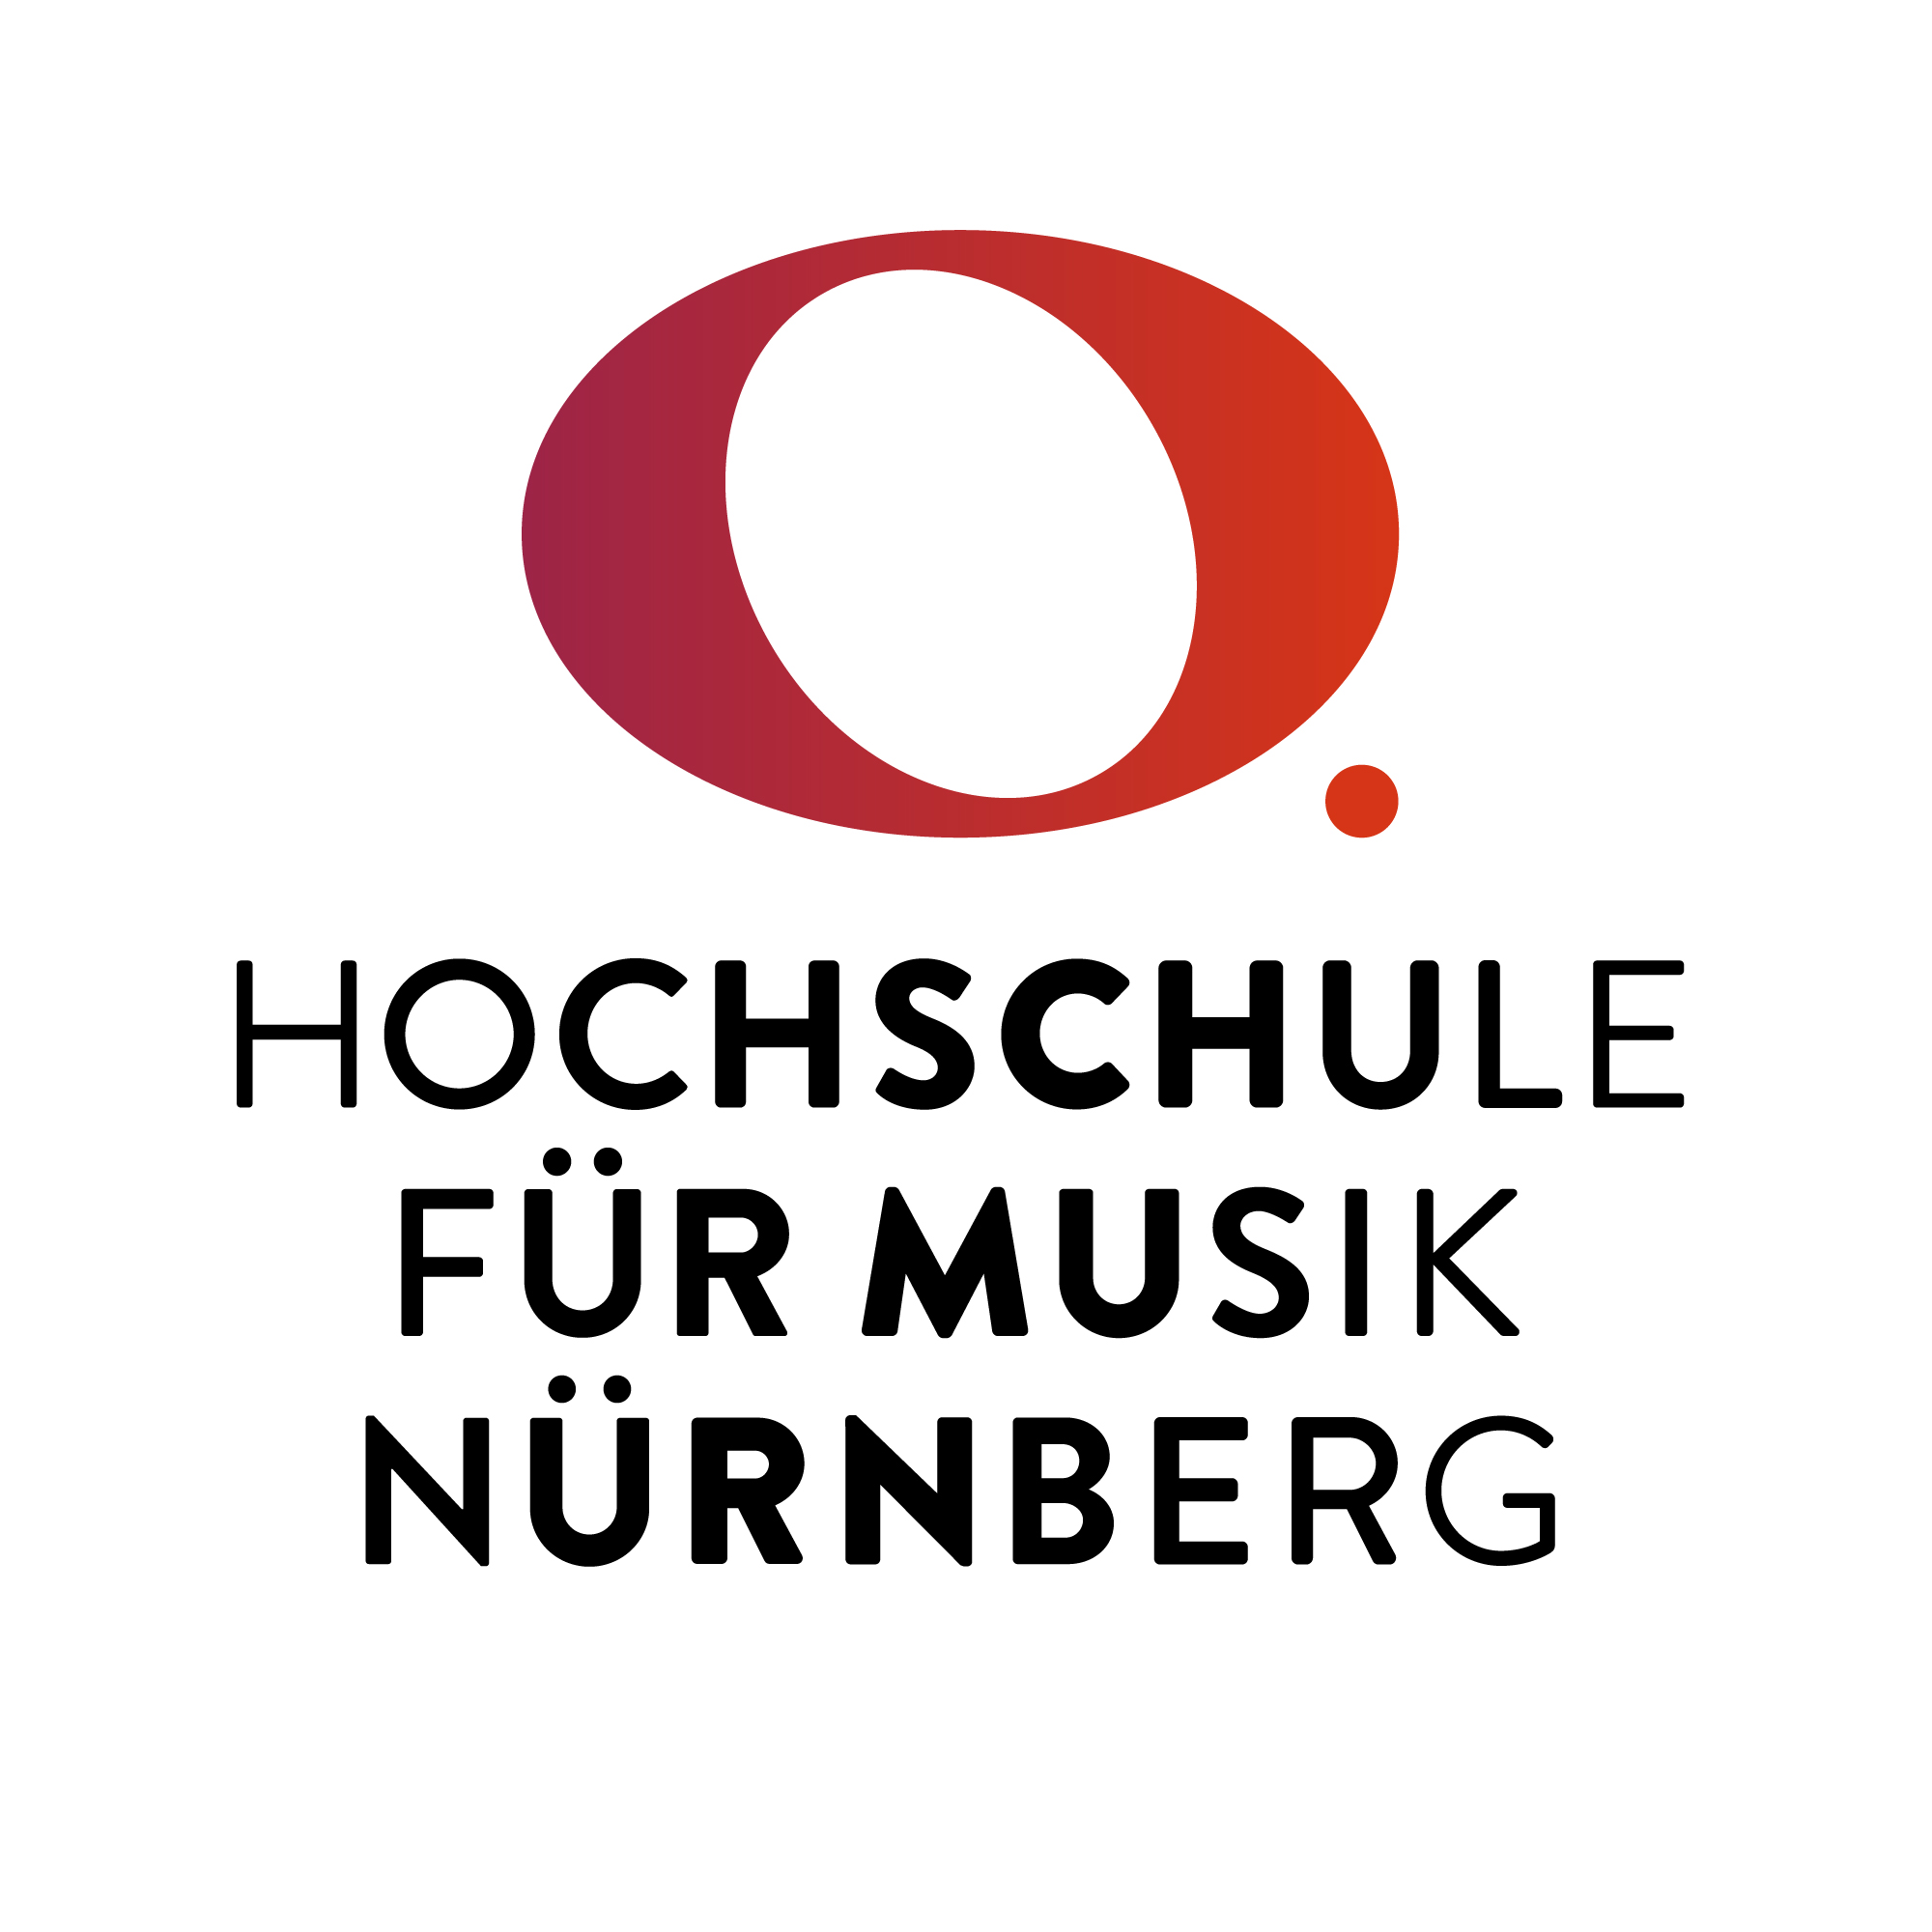 HFM - Hochschule für Musik Nürnberg Logo